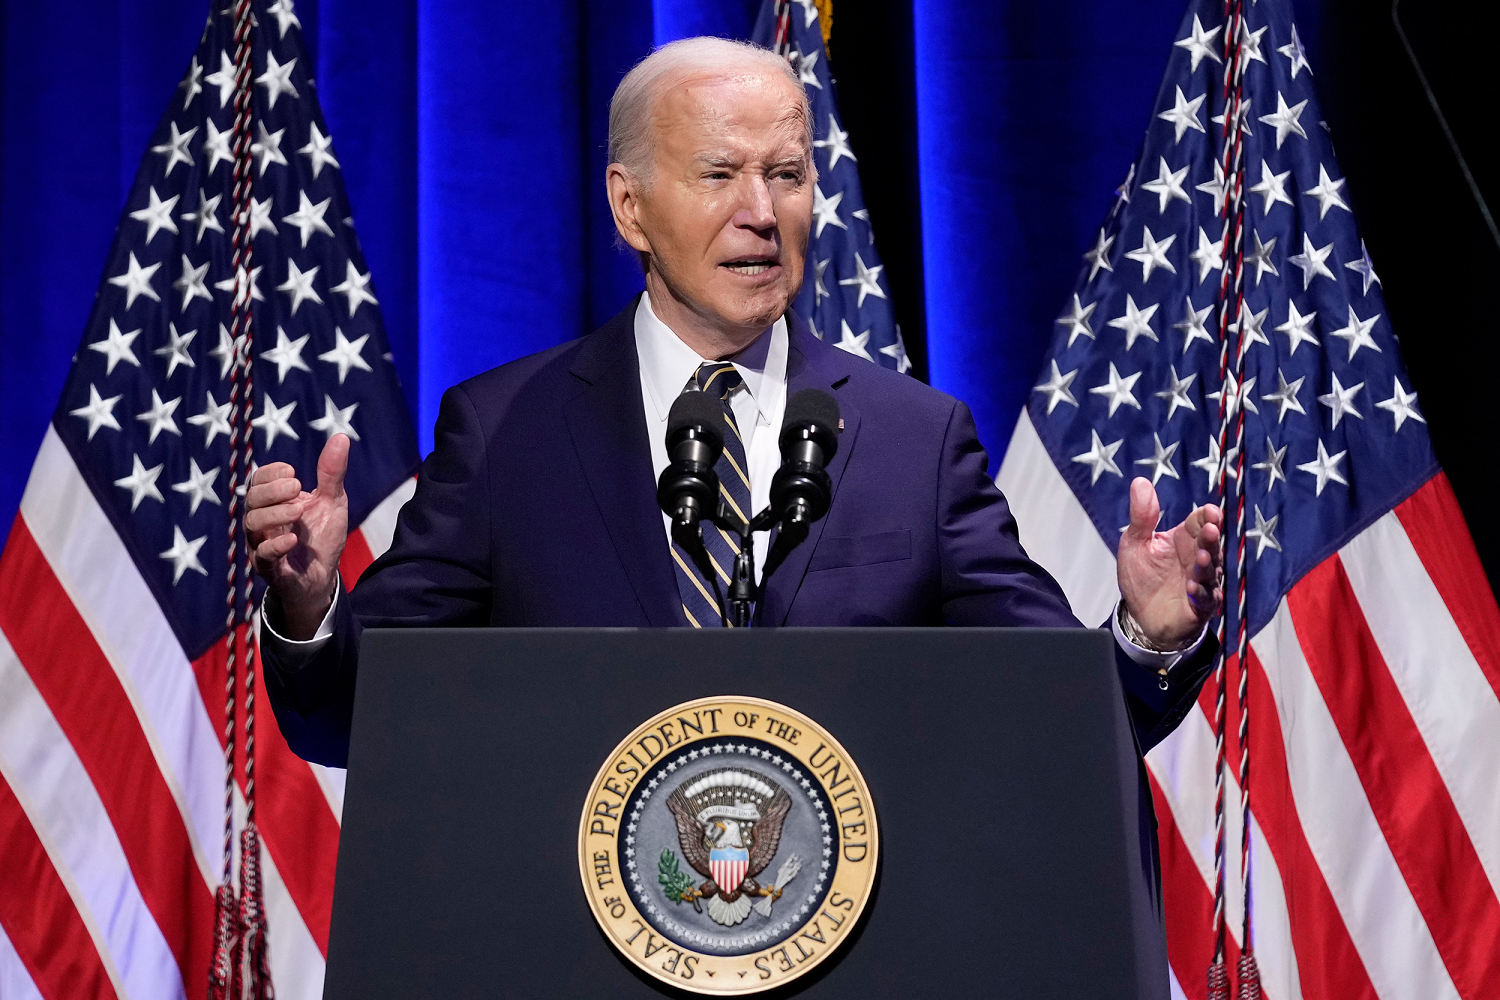 ‘No more games’: Biden rejects additional debates against Trump